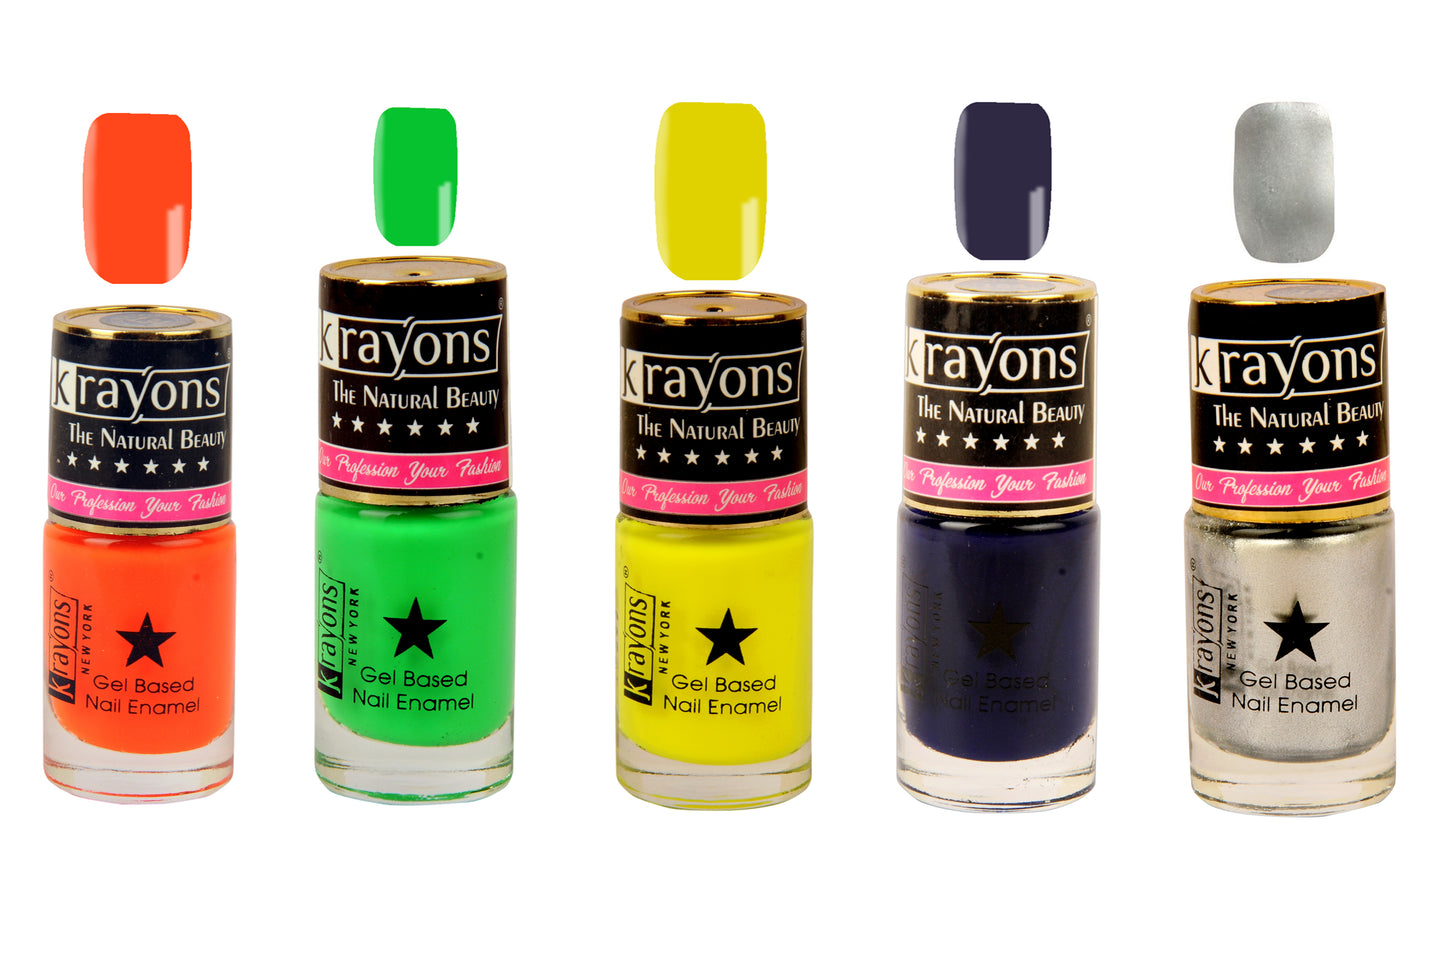 Krayons Gel Base Glossy Effect Nail Polish Enamel Color, Waterproof, Longlasting, 6ml Each, Combo, Pack of 5 (Neon Orange, Neon Green, Neon Yellow, Deep Blue, Silver Grey)